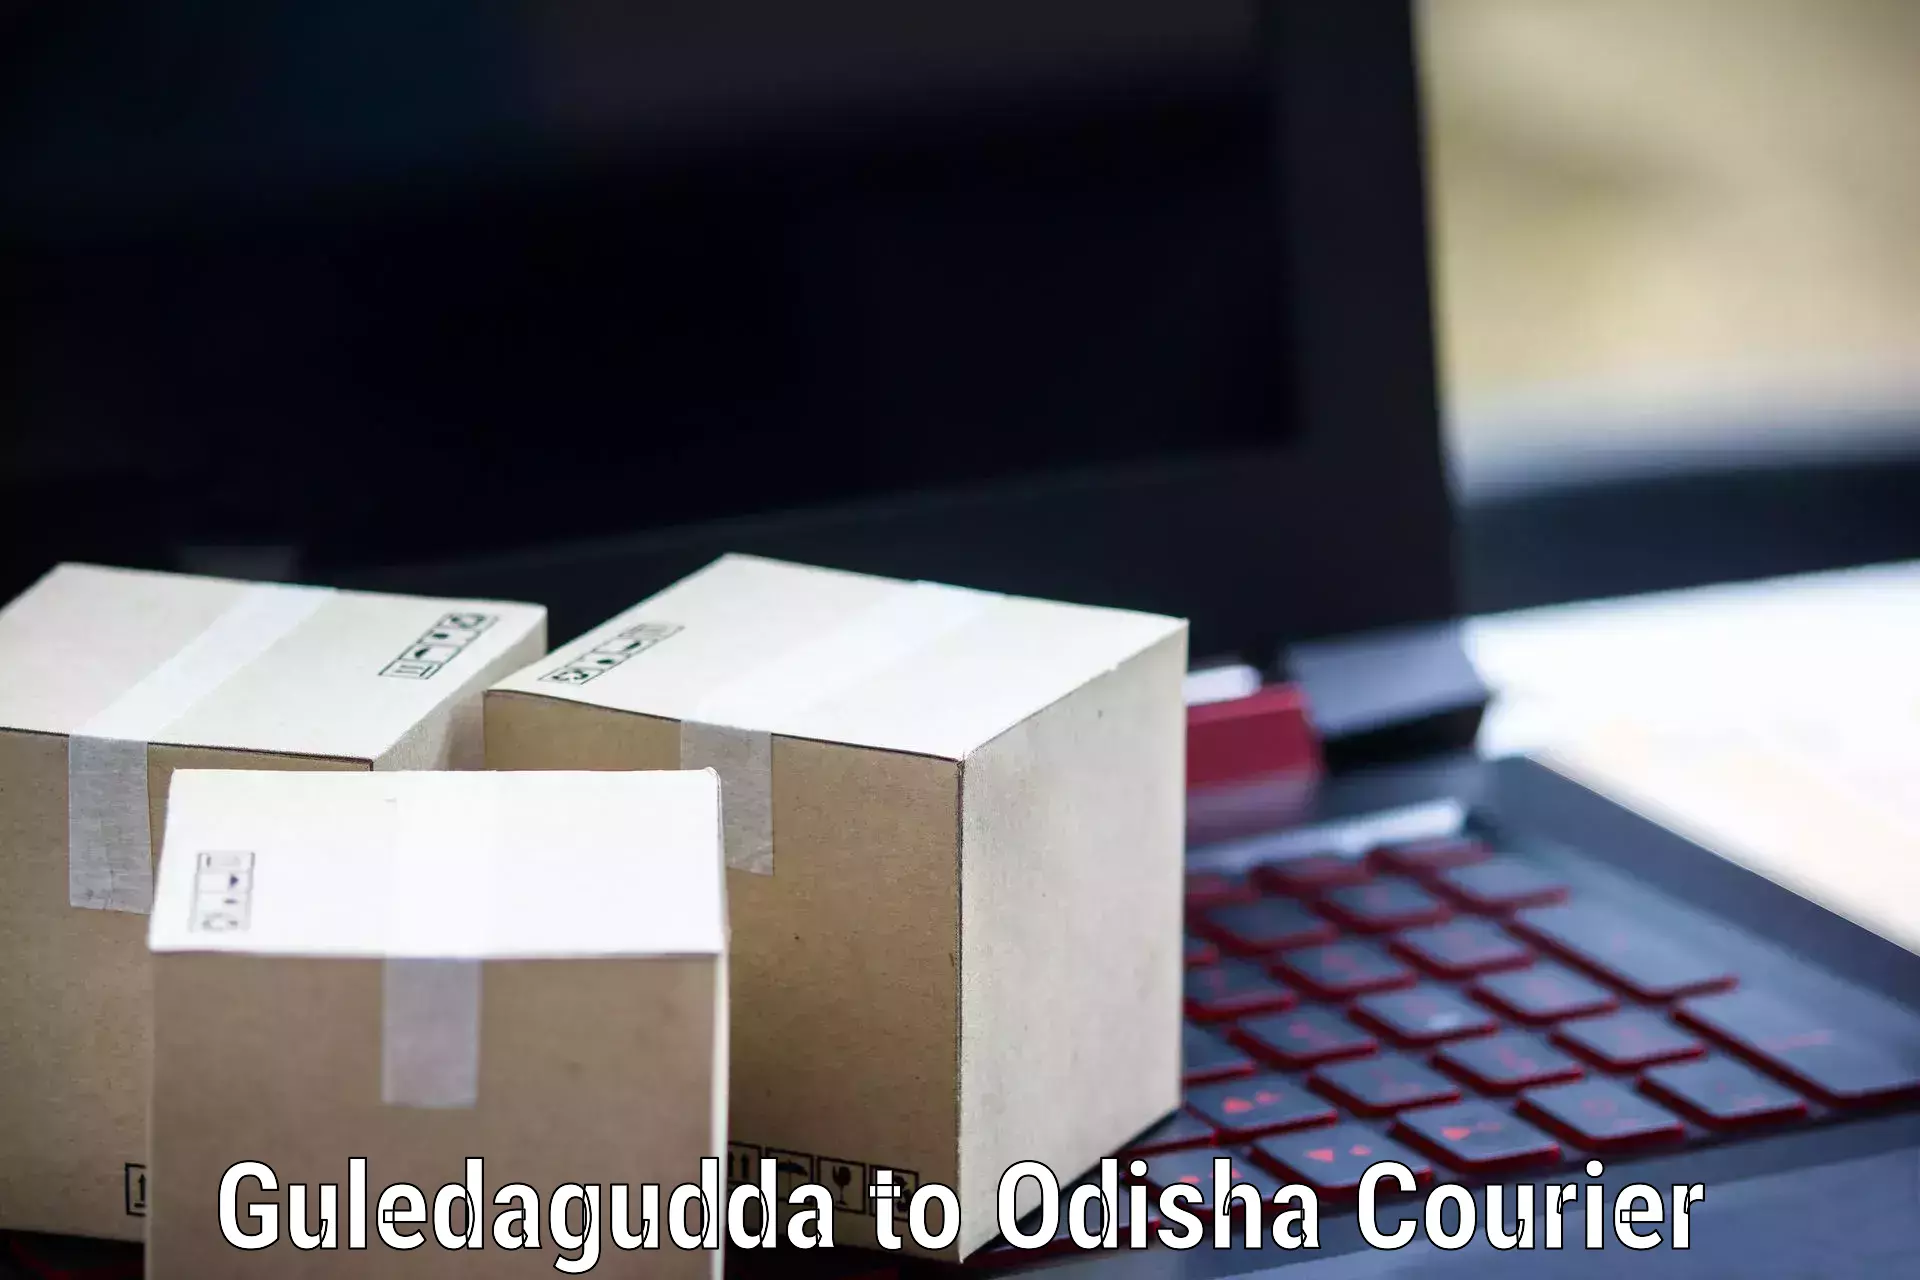 Express delivery network Guledagudda to Athagarh